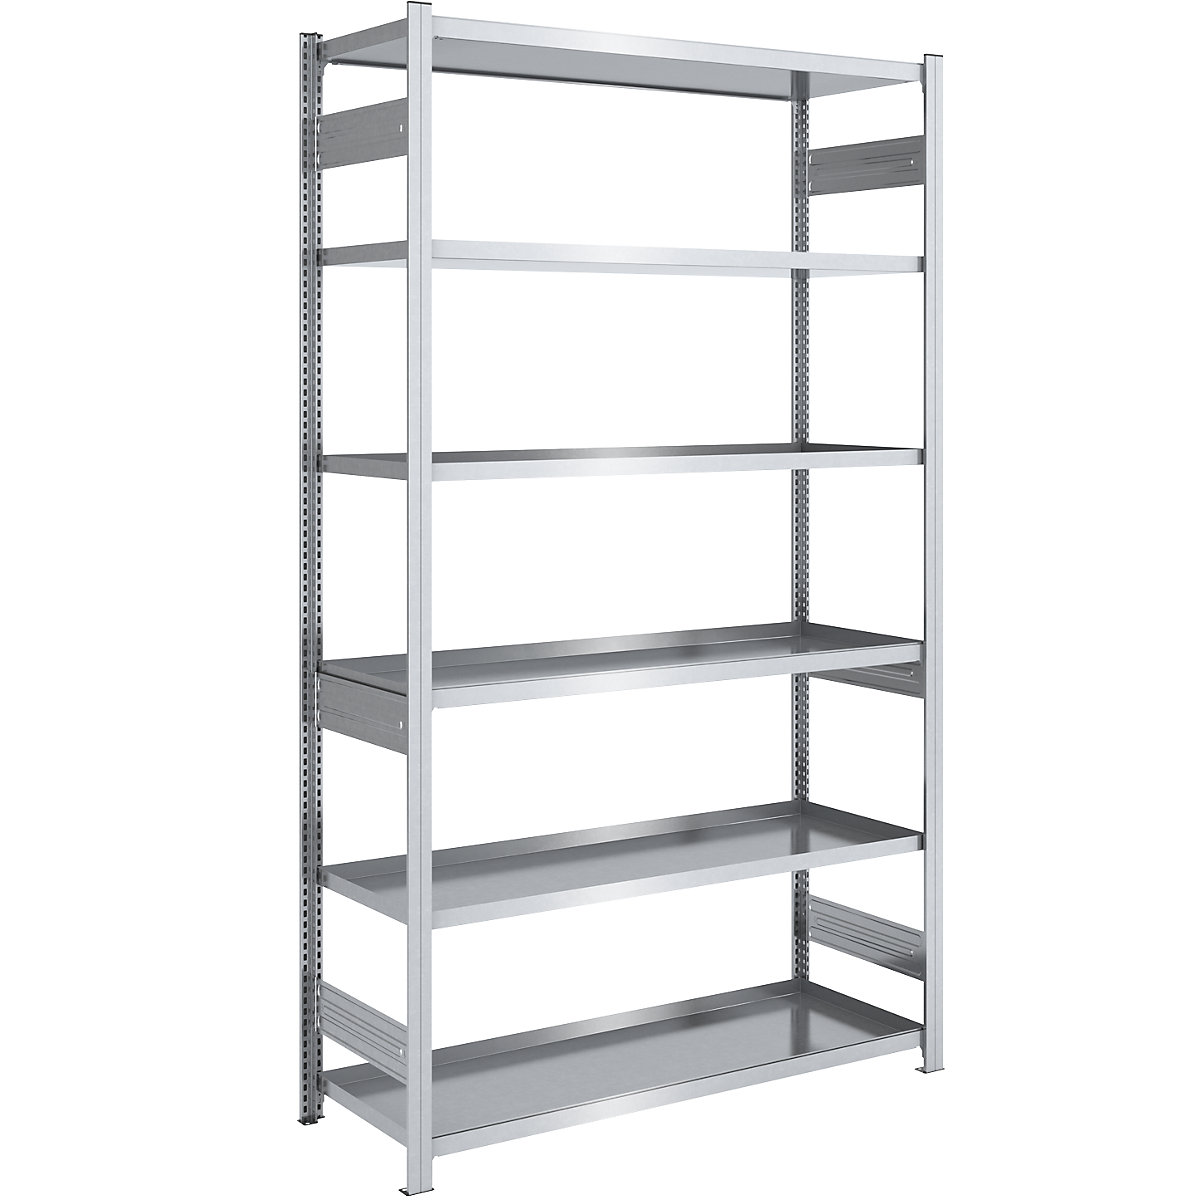 Tray shelf unit – hofe, shelf unit height 2500 mm, tray width 1300 mm, tray depth 600 mm, standard shelf unit